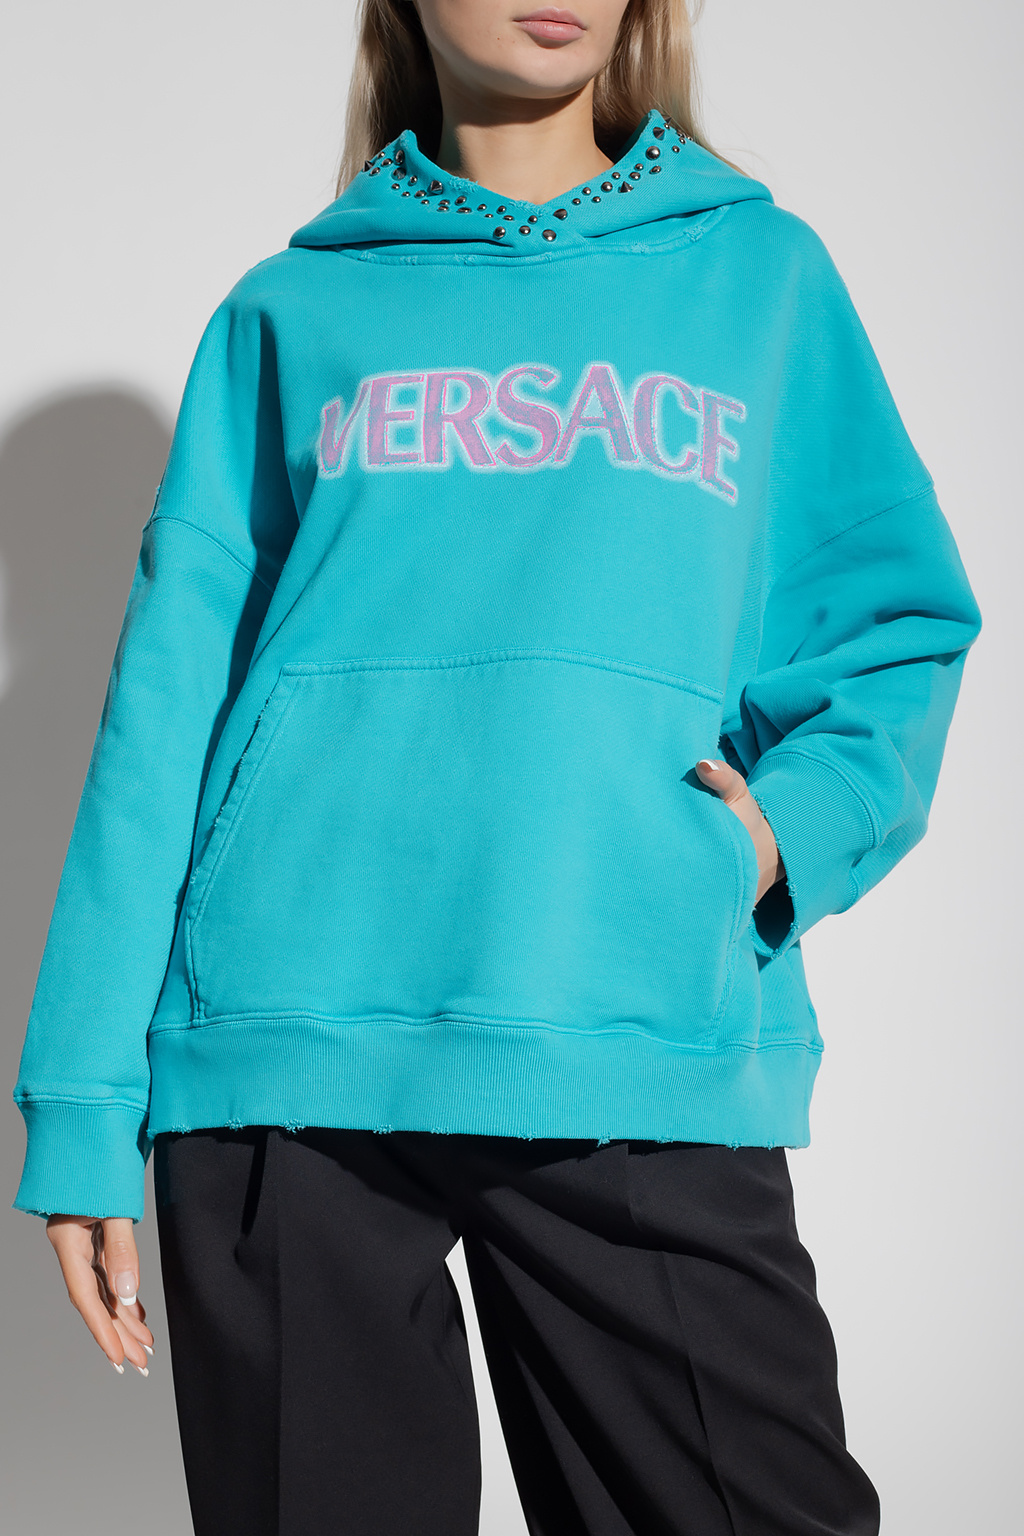 Versace Moschino teddy bear-print sweatshirt